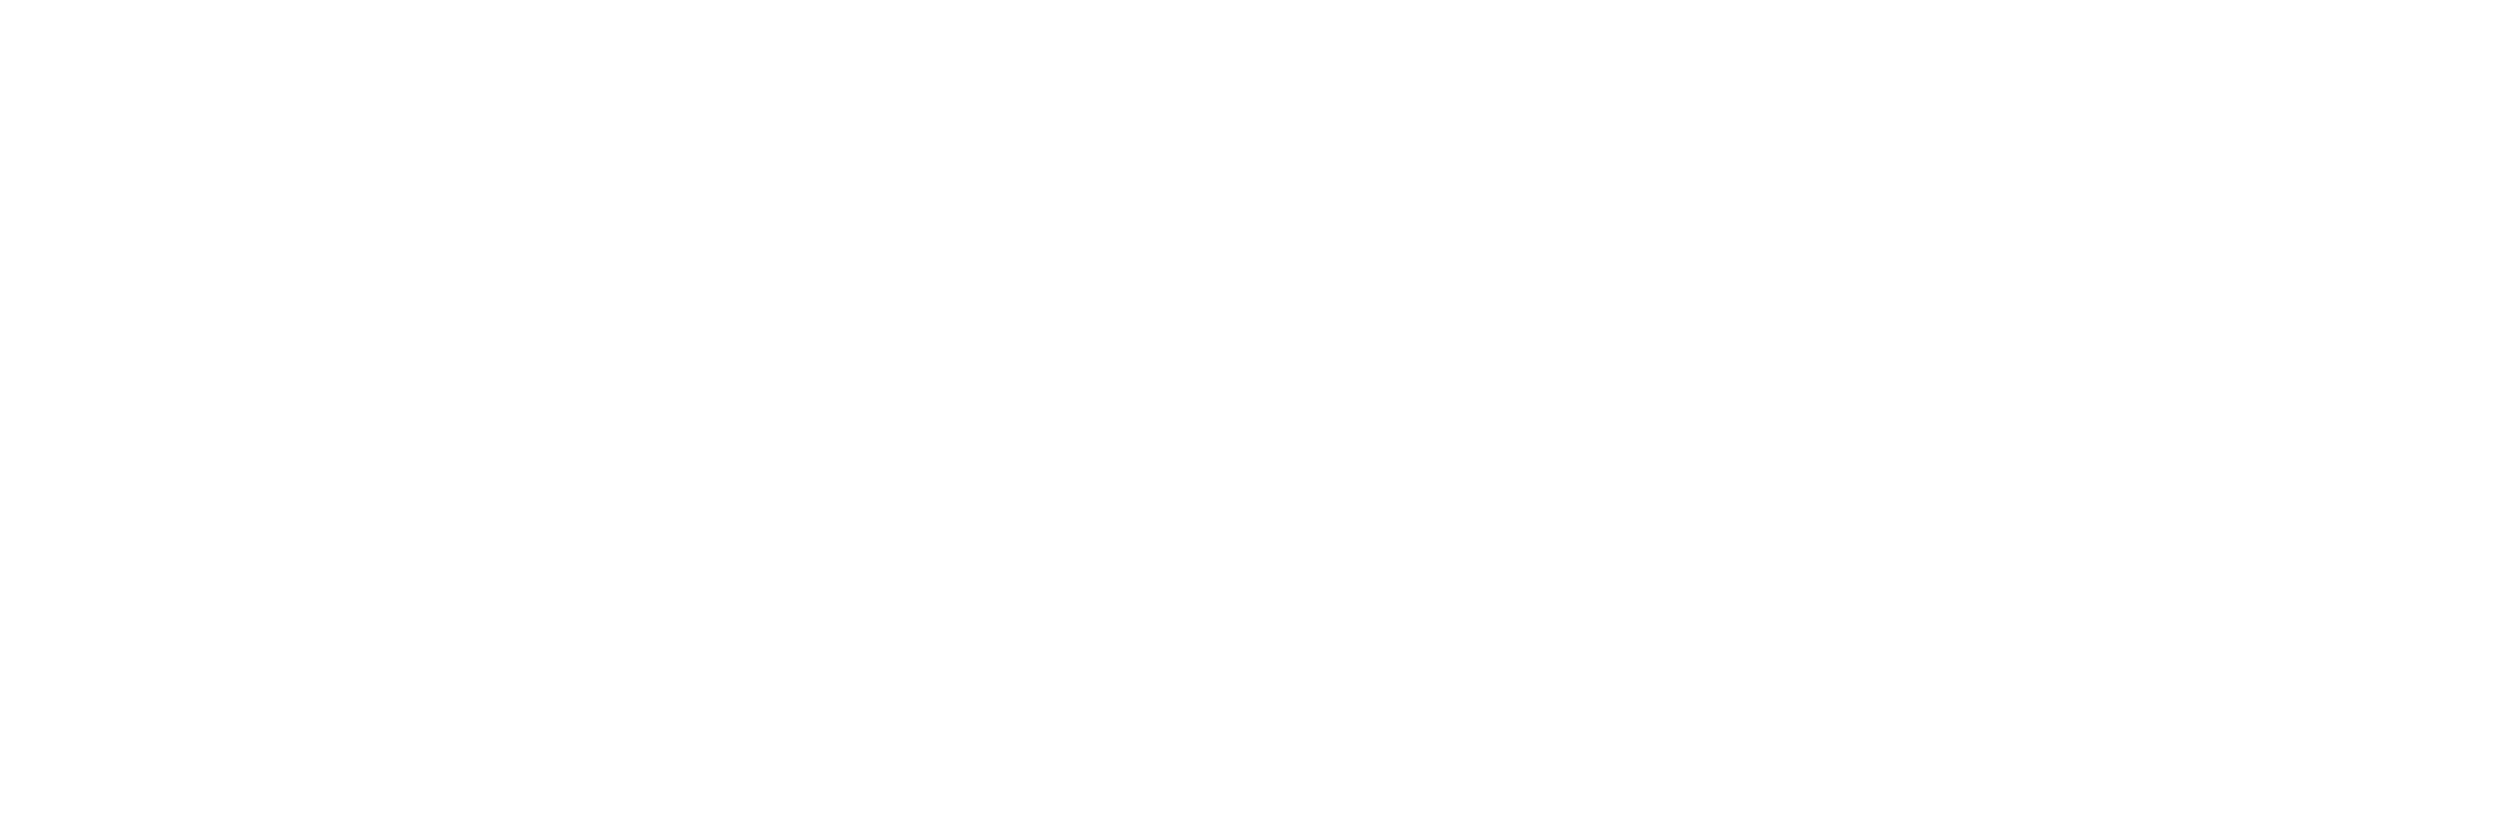 Laravel EasyForms Logo